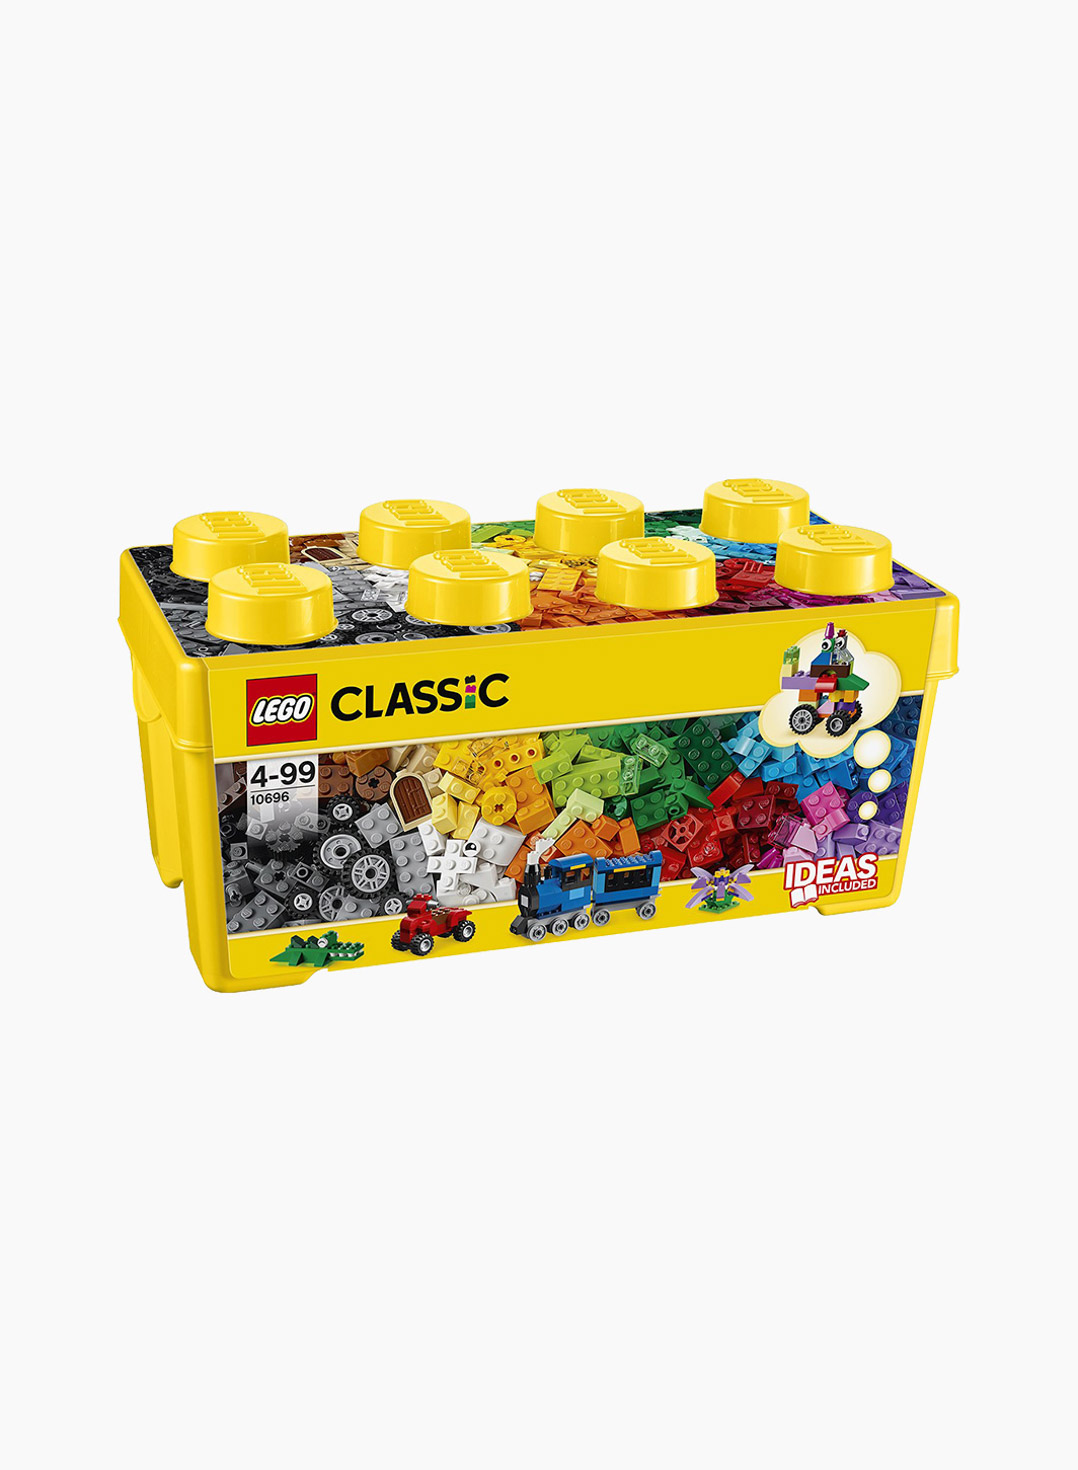 Lego Classic Constructor Medium Creative Brick Box